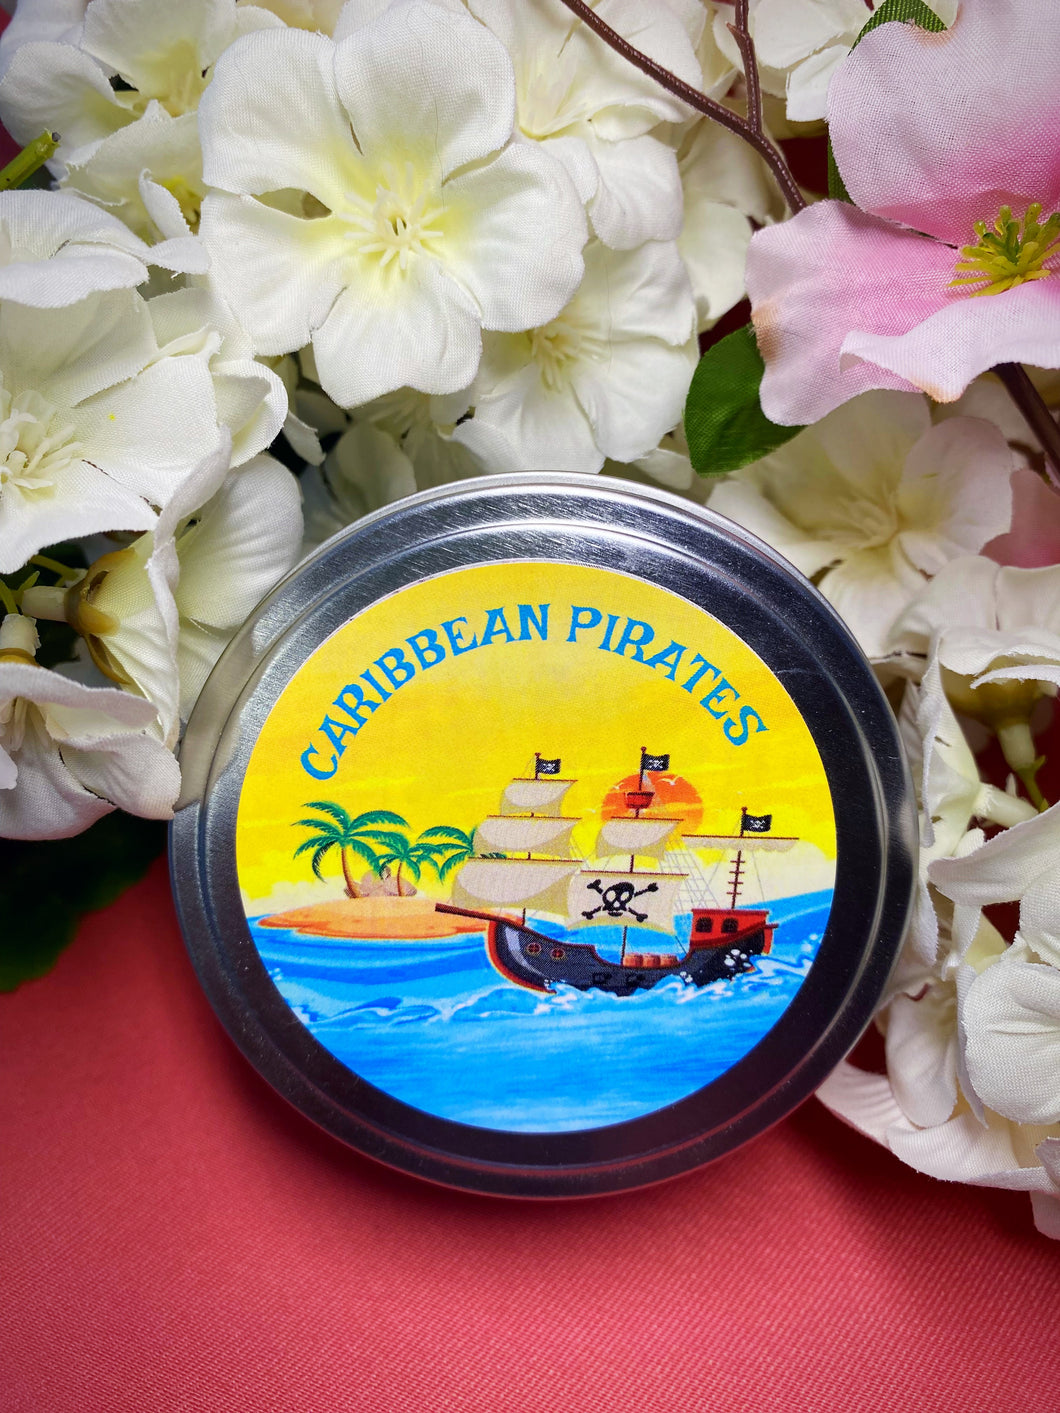 Caribbean Pirates Candles & Wax Melts